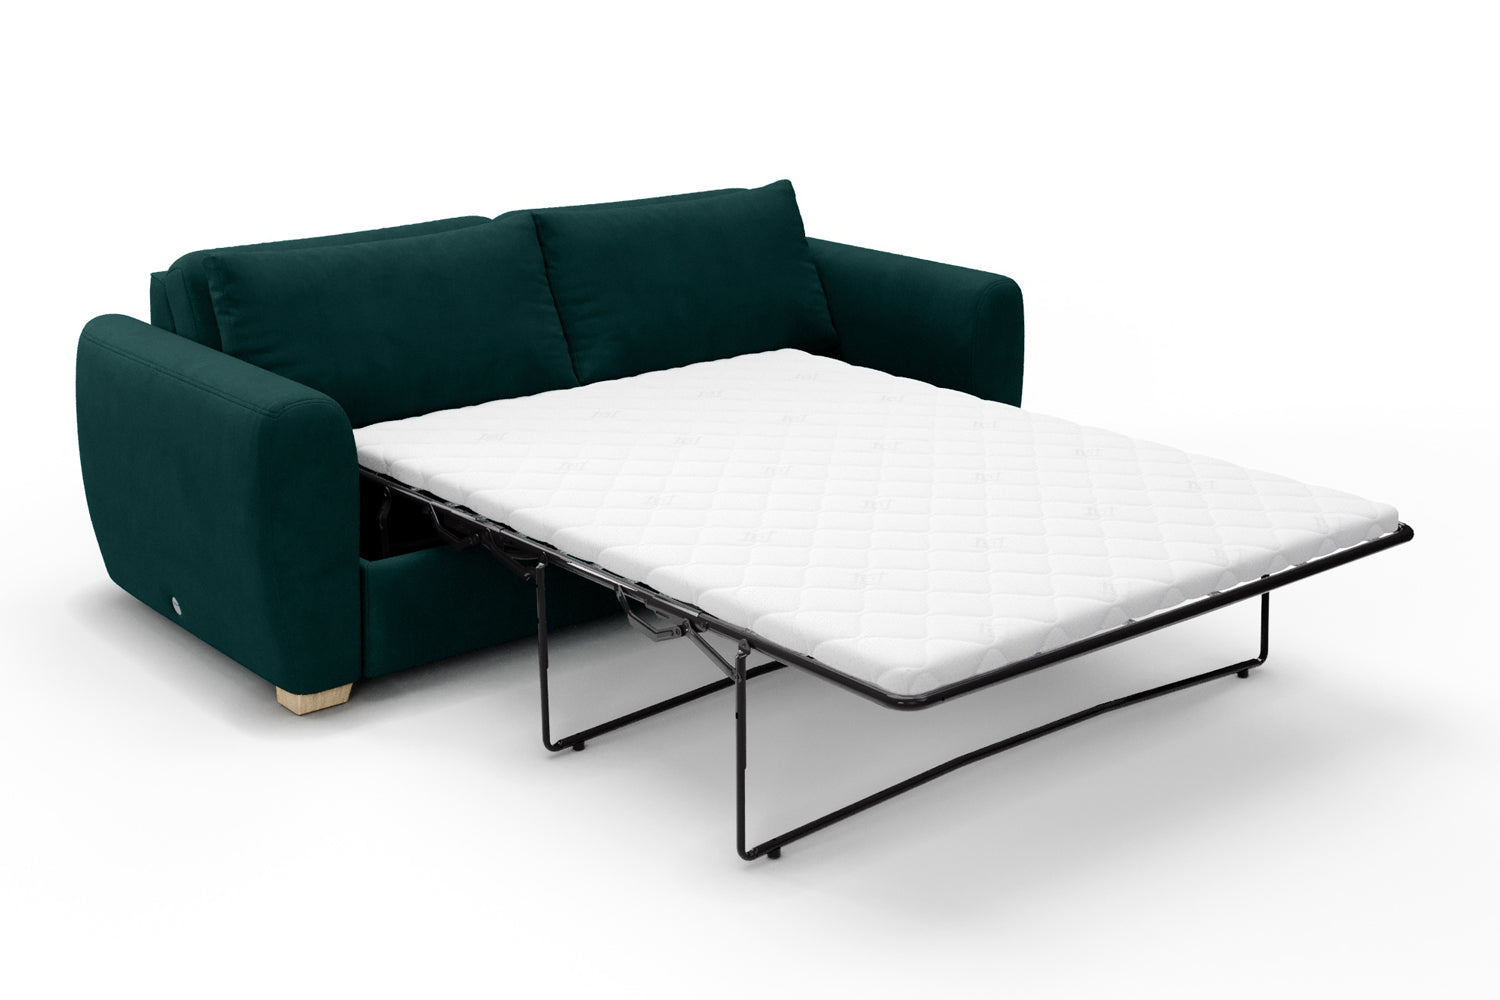 SNUG | The Cloud Sundae 3 Seater Sofa Bed in Pine Green